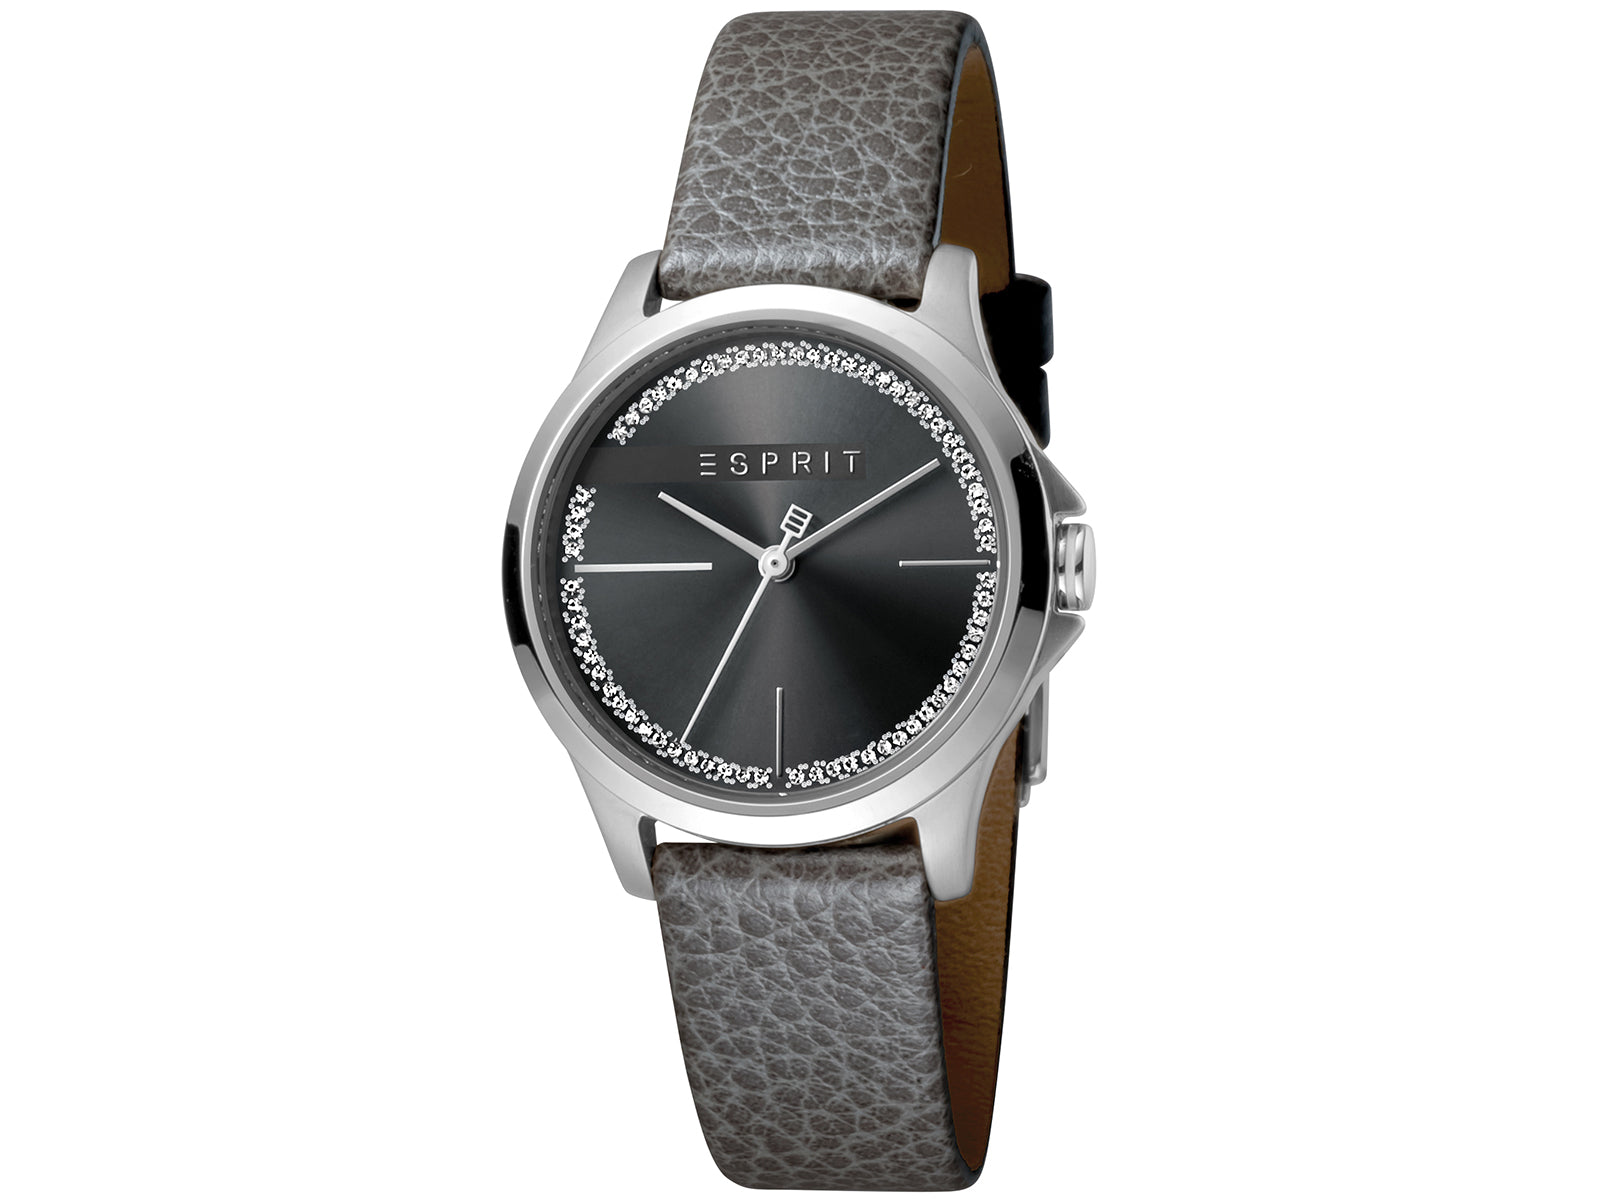 Esprit Grey Calf Leather Watch